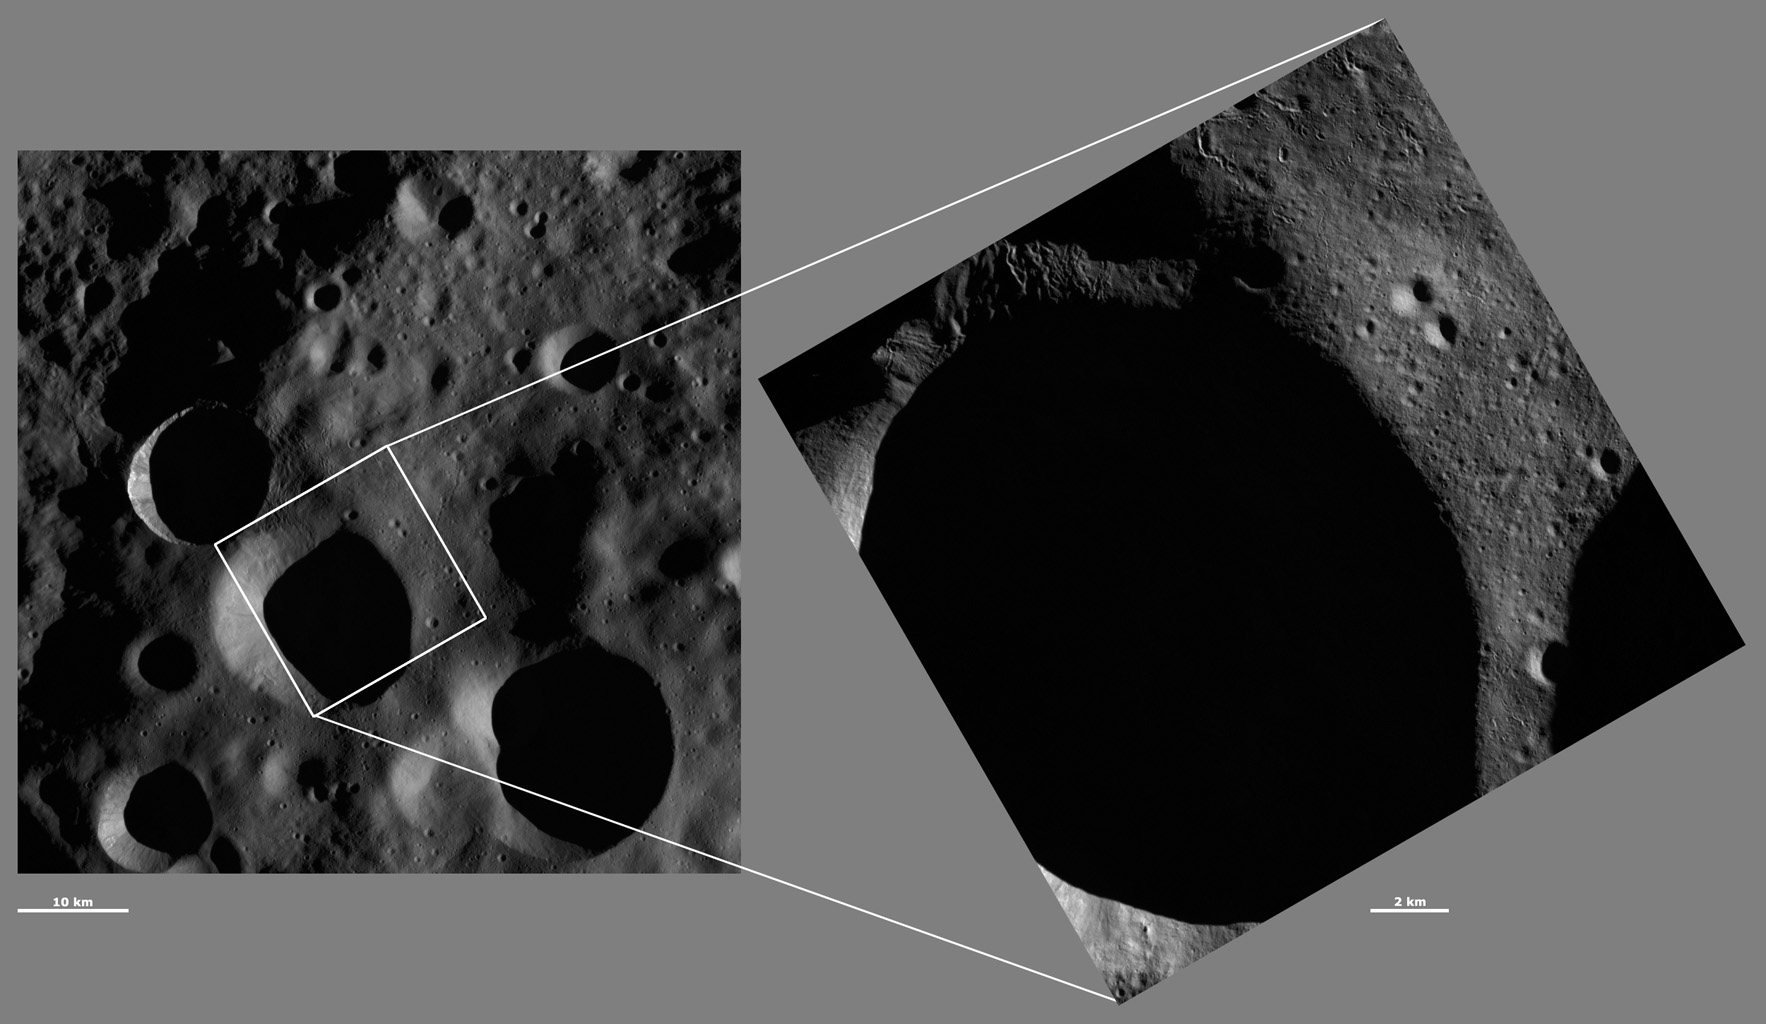 HAMO and LAMO Images of Floronia Crater